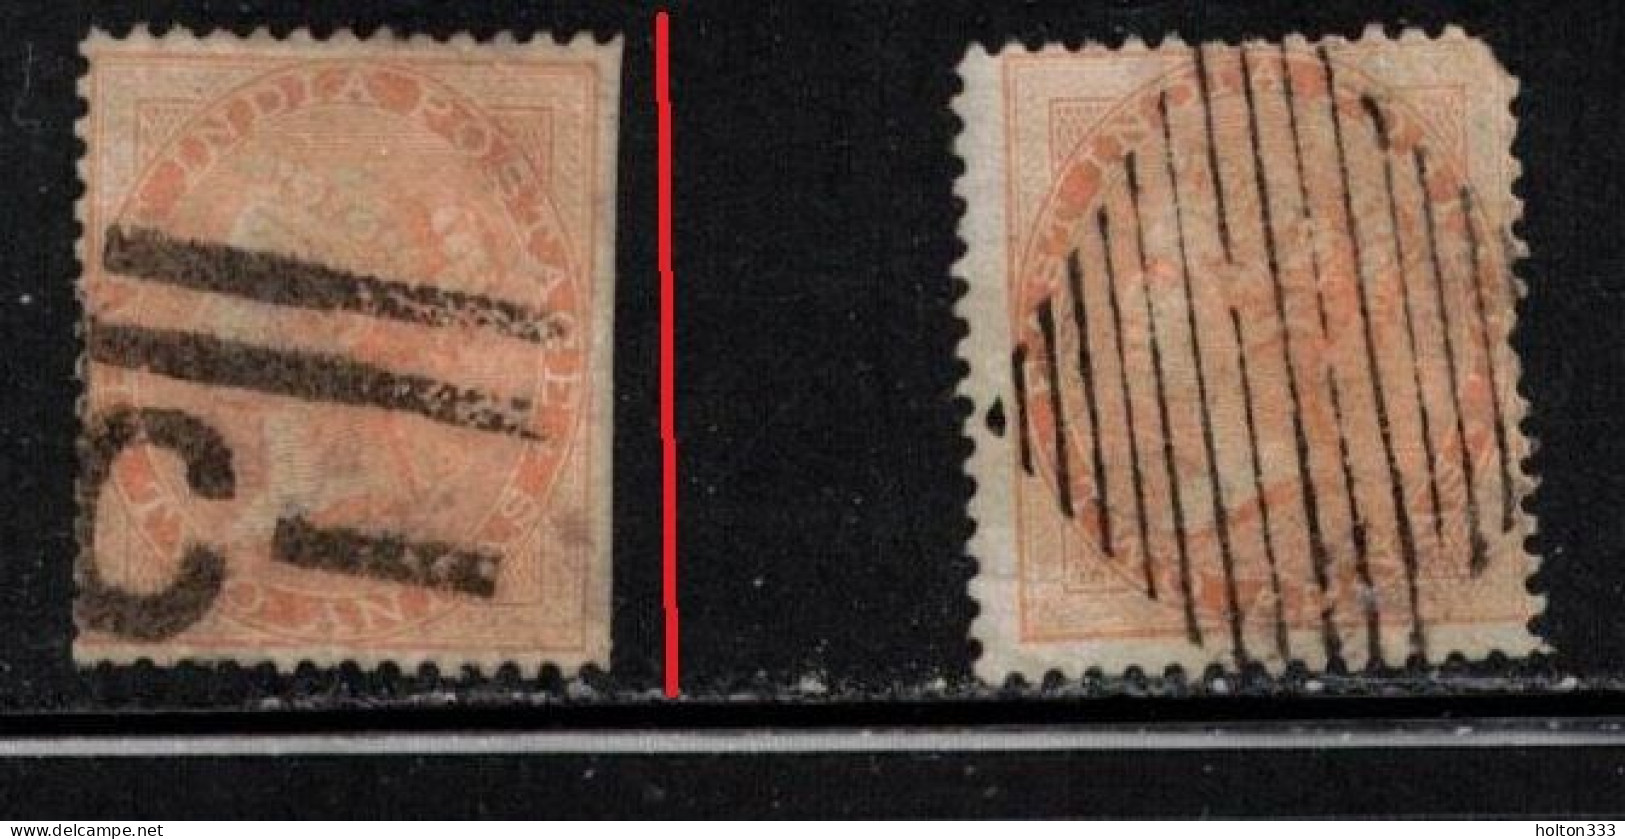 INDIA Scott # 23 Used X 2 - QV - Hinge Remnant - Clipped Perfs On 1 Stamp - 1854 Britische Indien-Kompanie